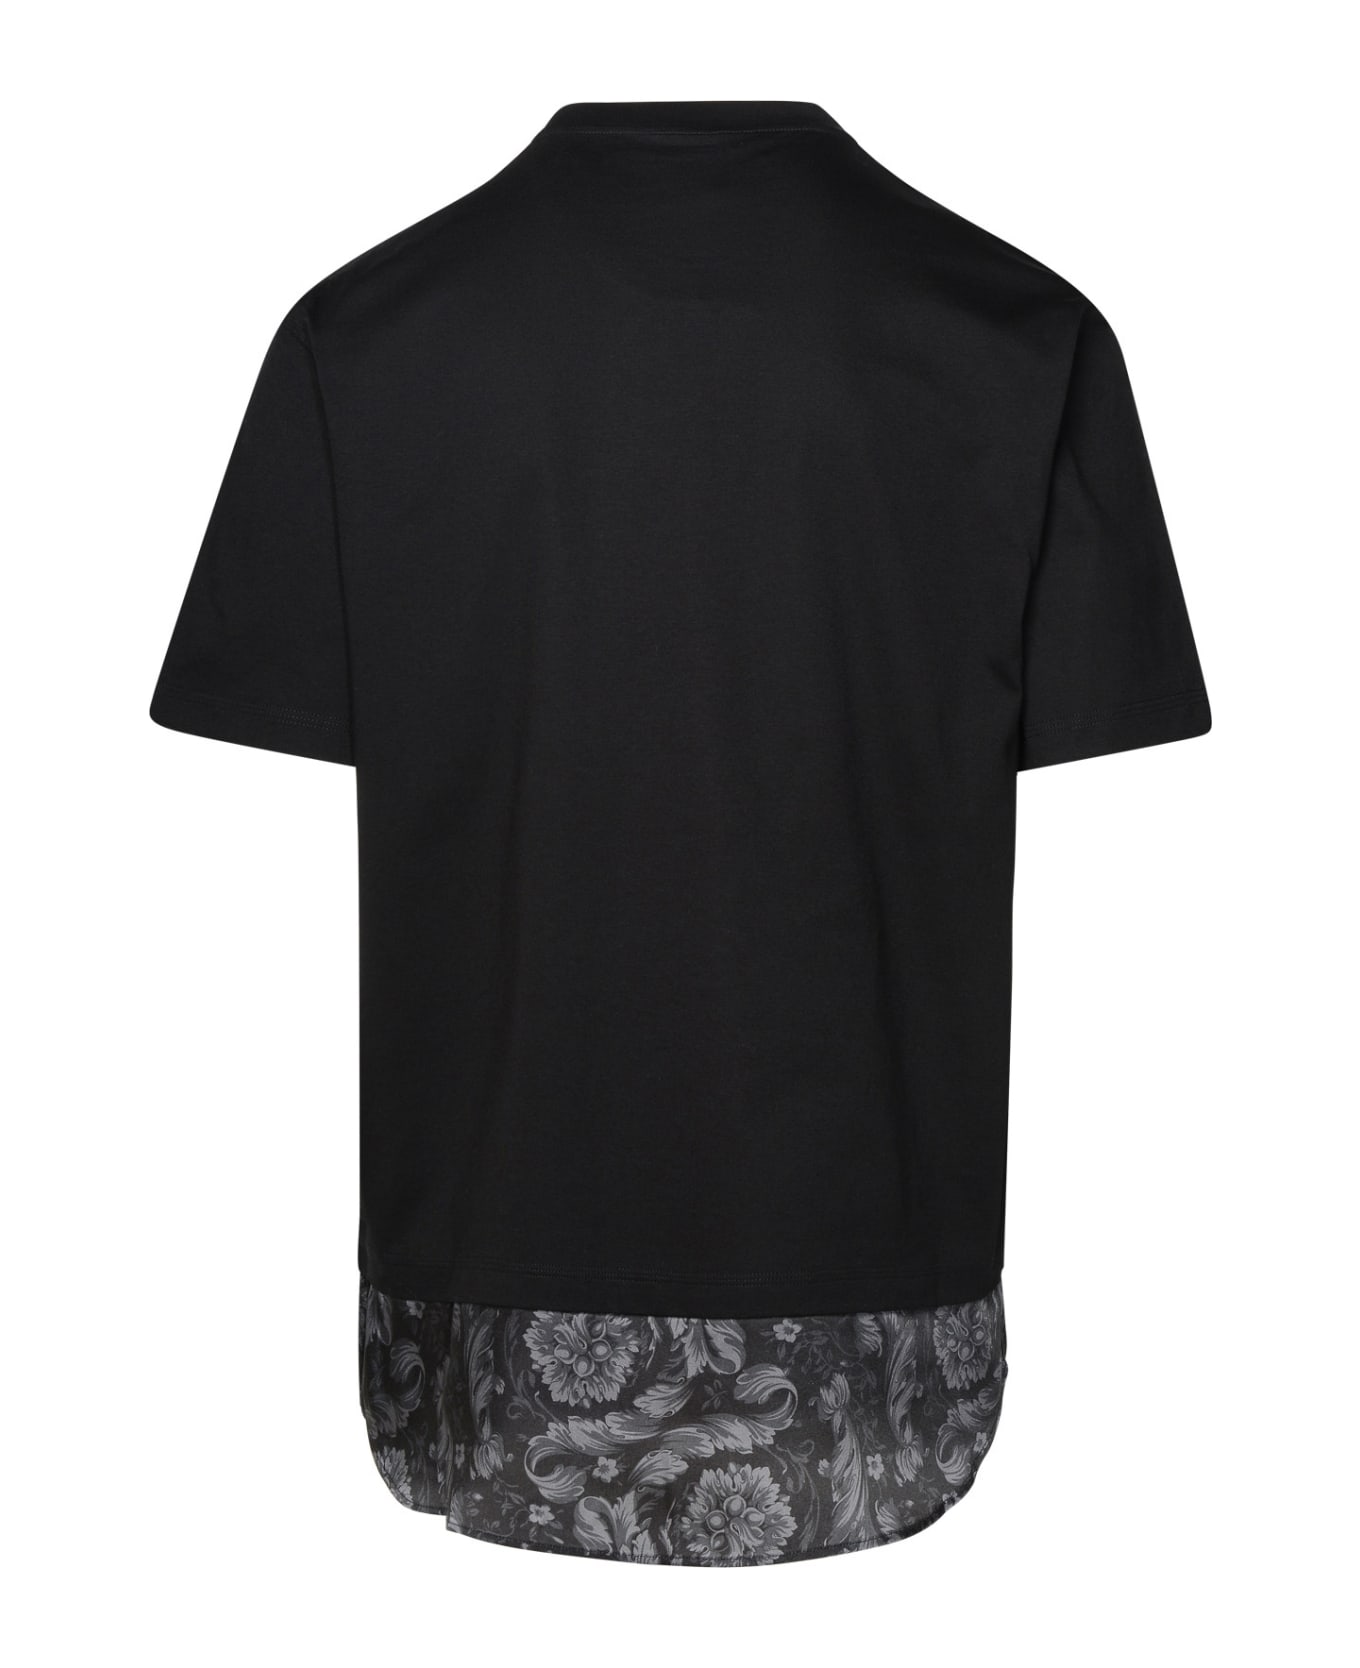 Versace Black Cotton T-shirt - NERO シャツ